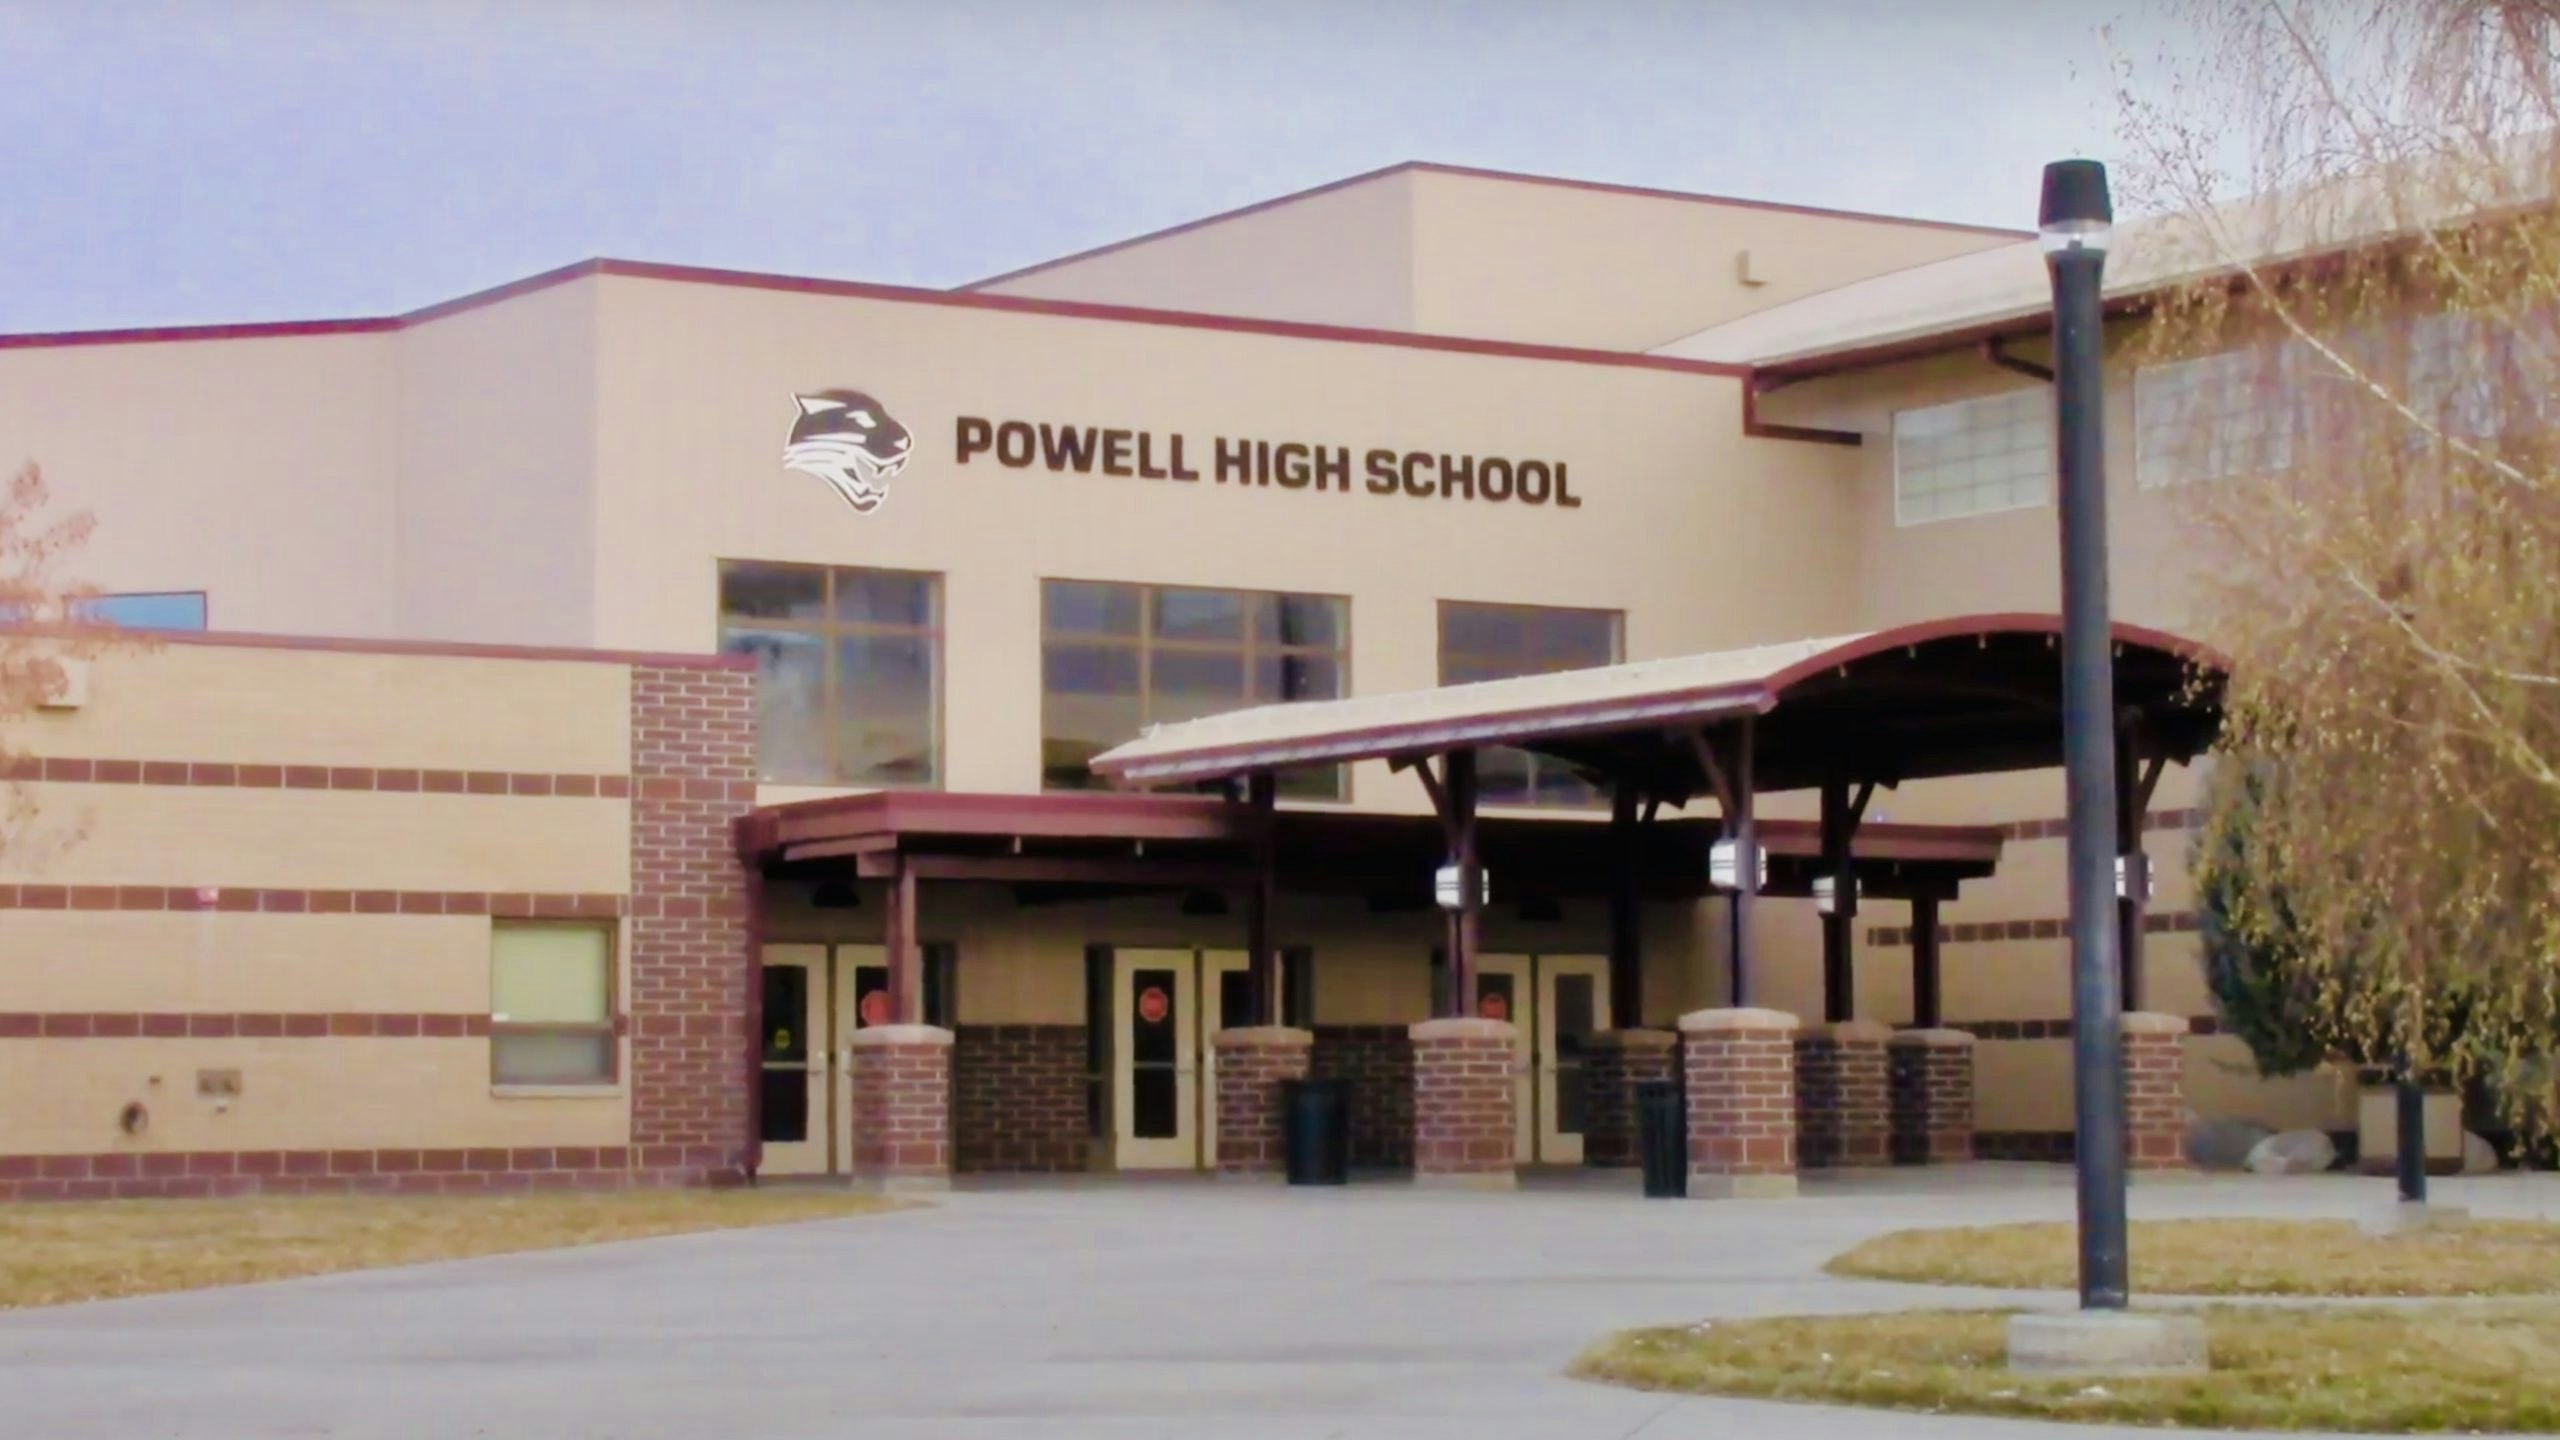 Powell high school 5 4 22 scaled